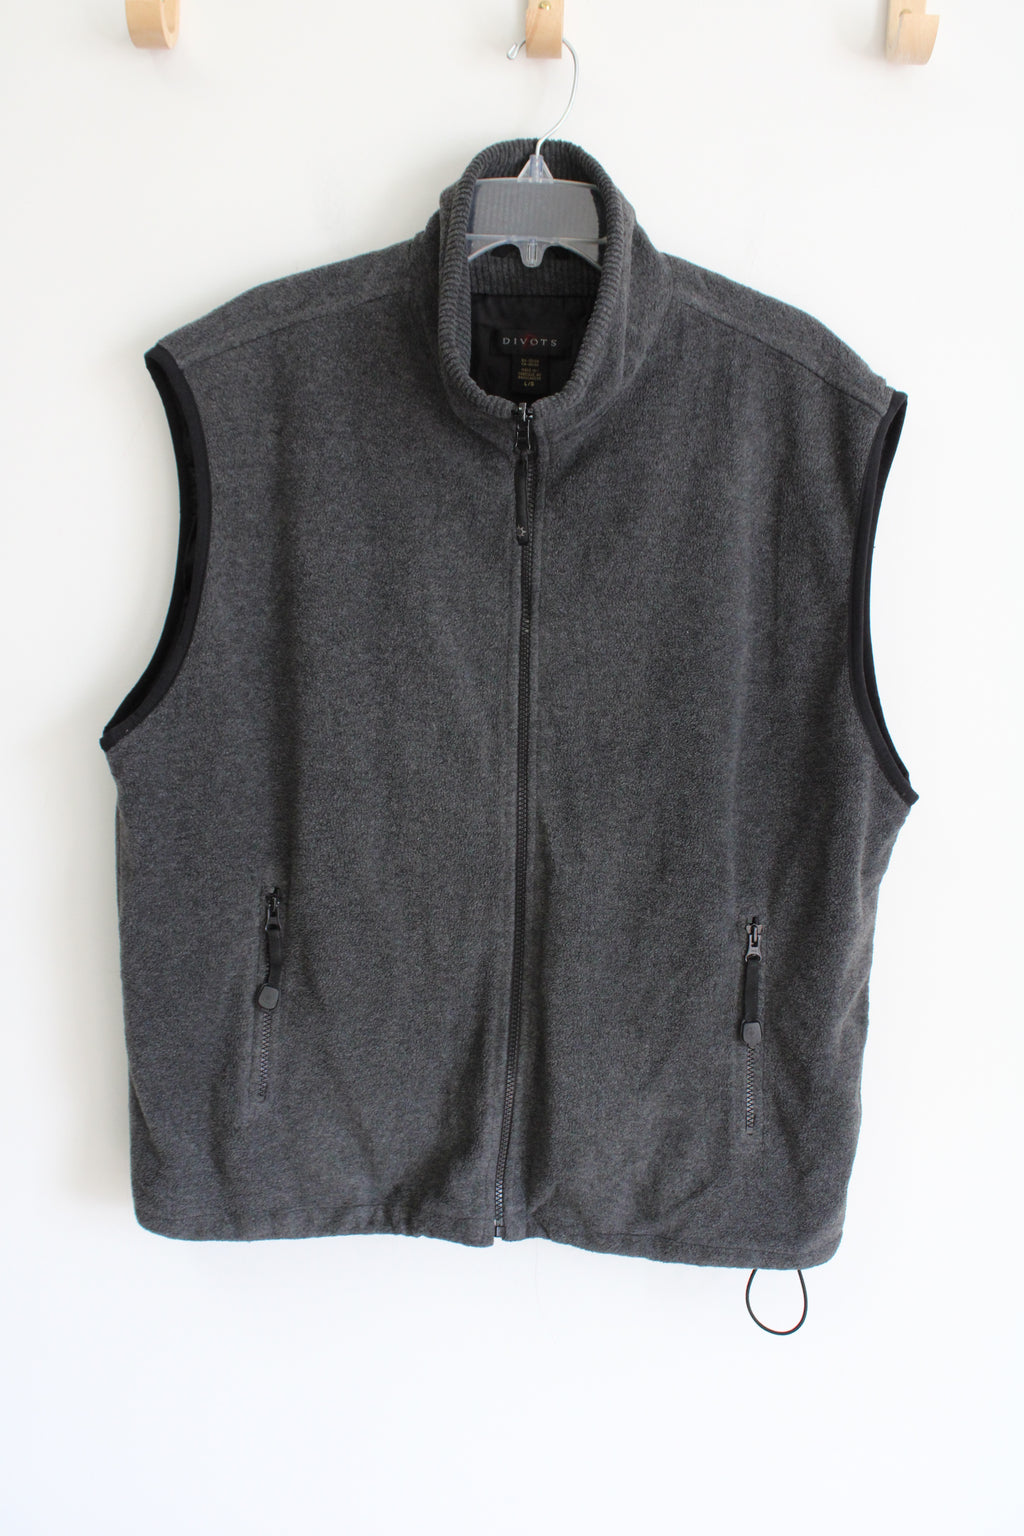 Divots Vintage Gray Fleece Polyester Lined Vest | L